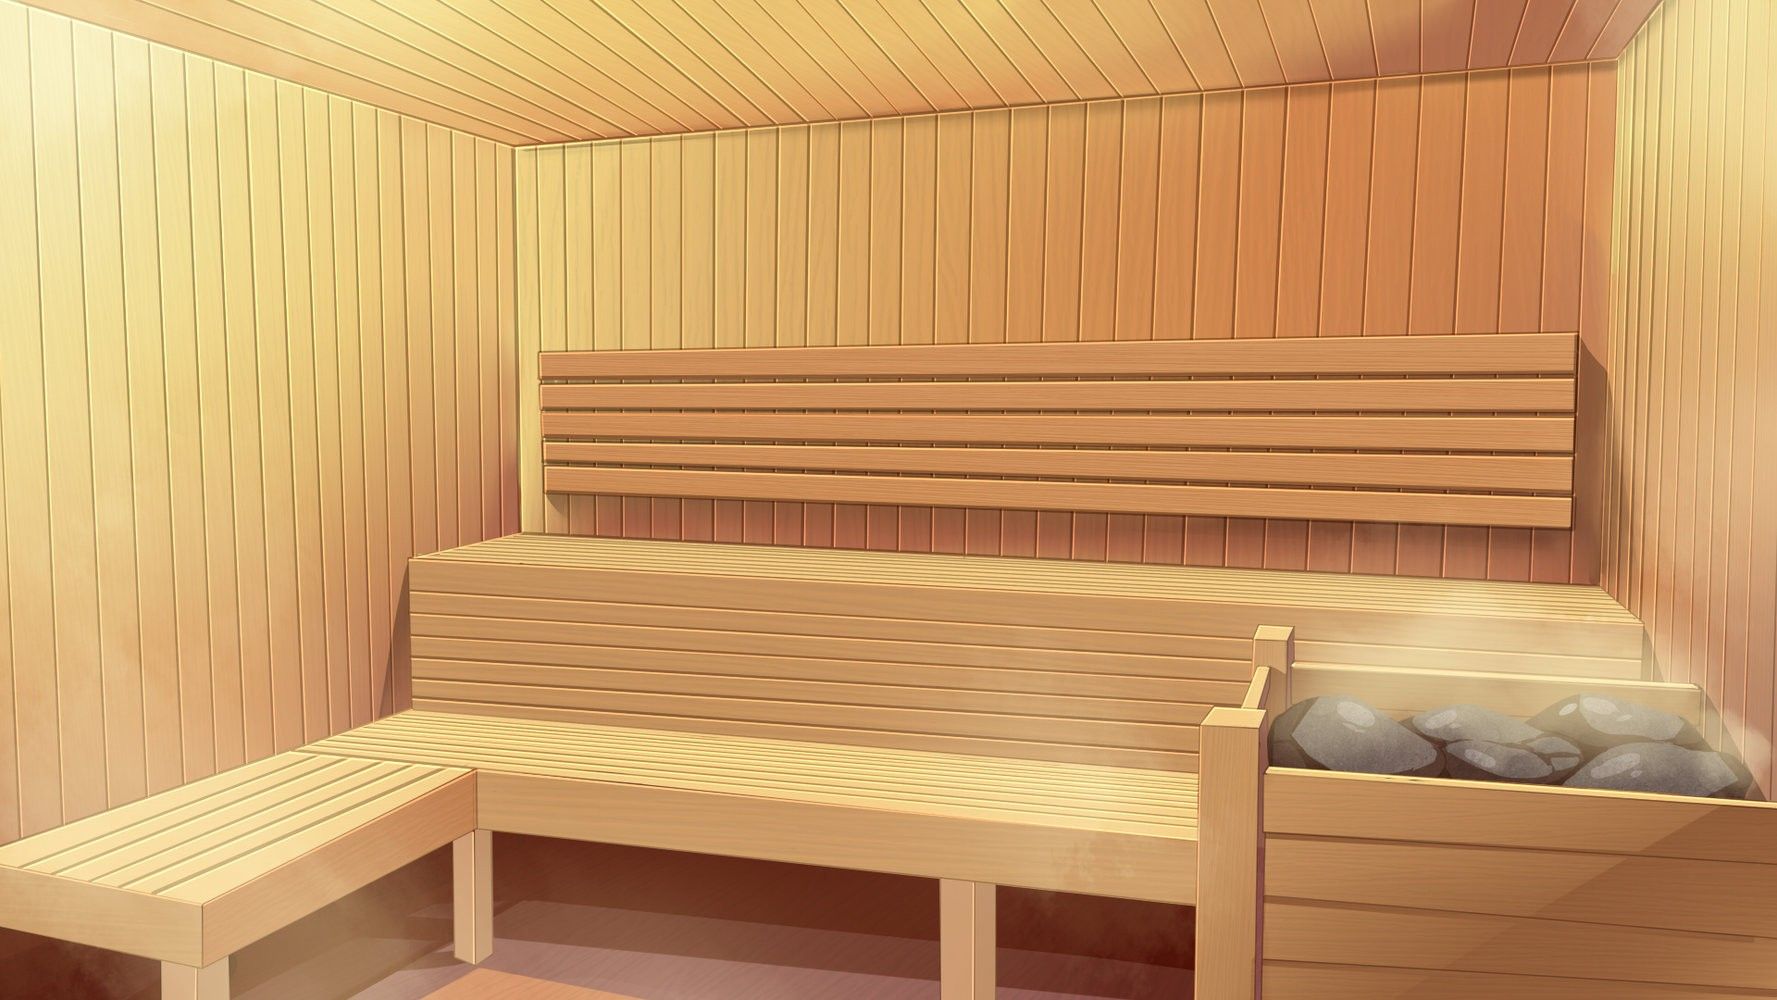 Sauna Background